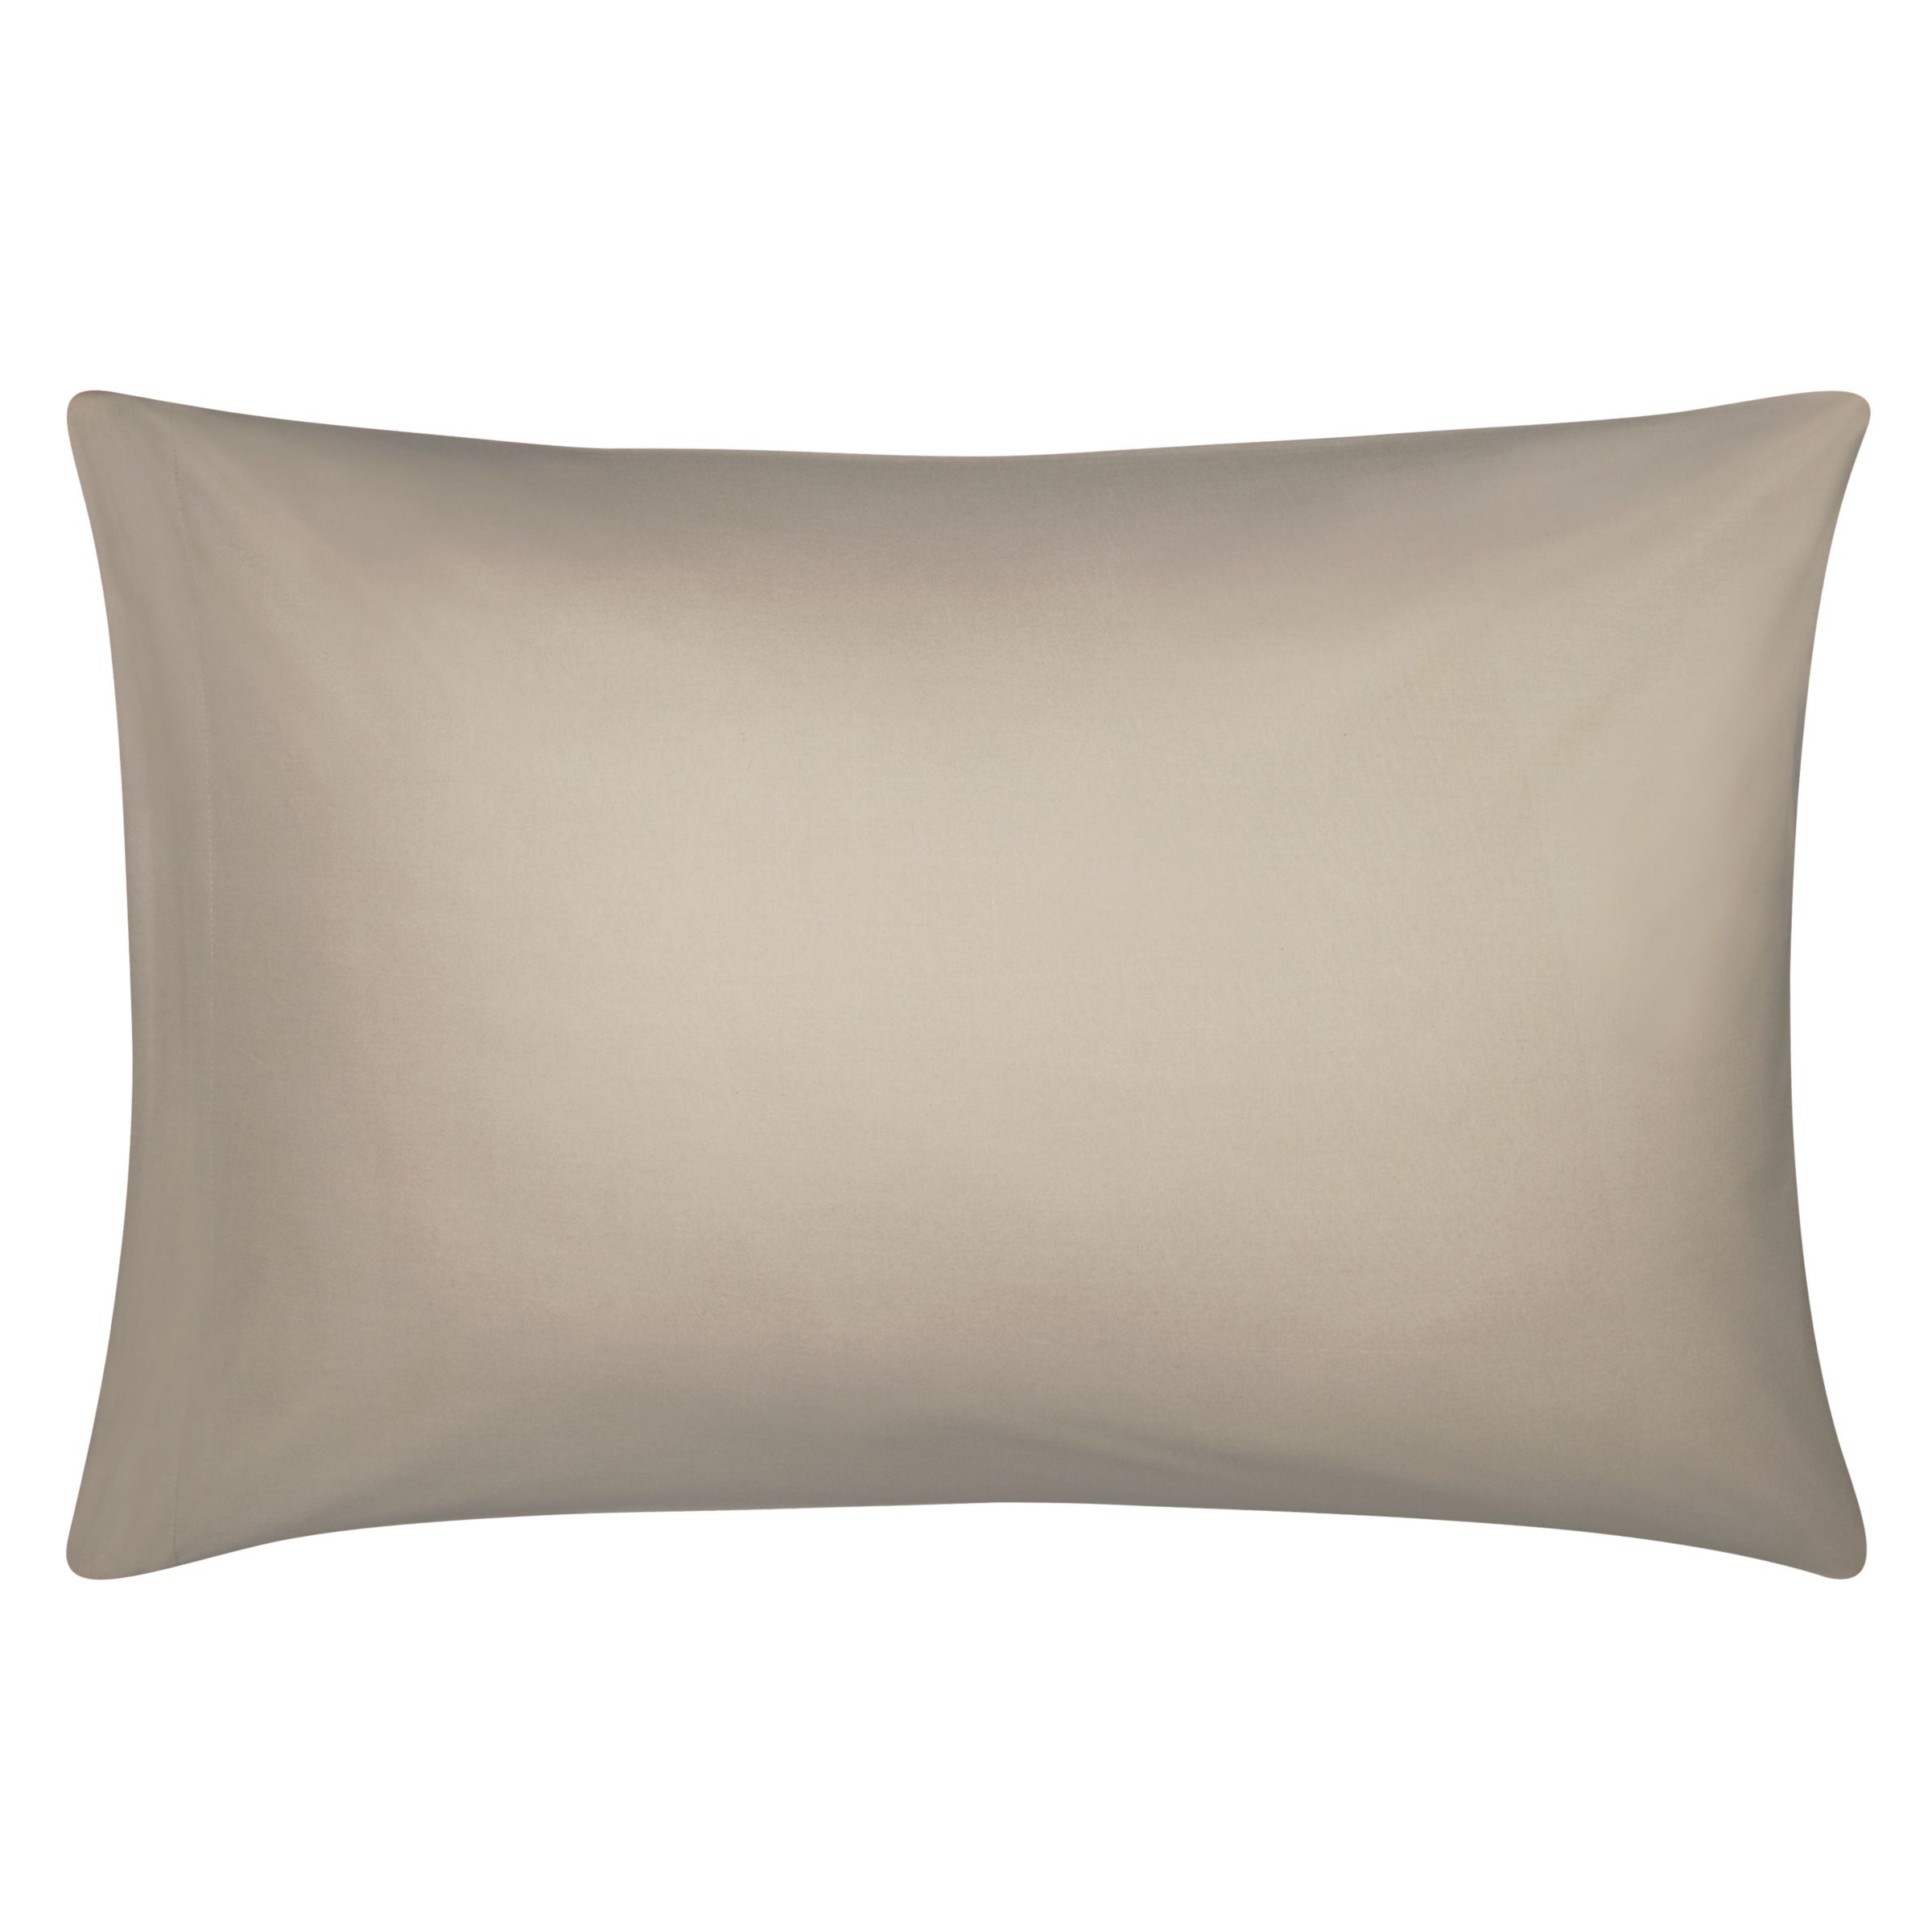 John Lewis & Partners 200 Thread Count Egyptian Cotton Standard Pillowcase